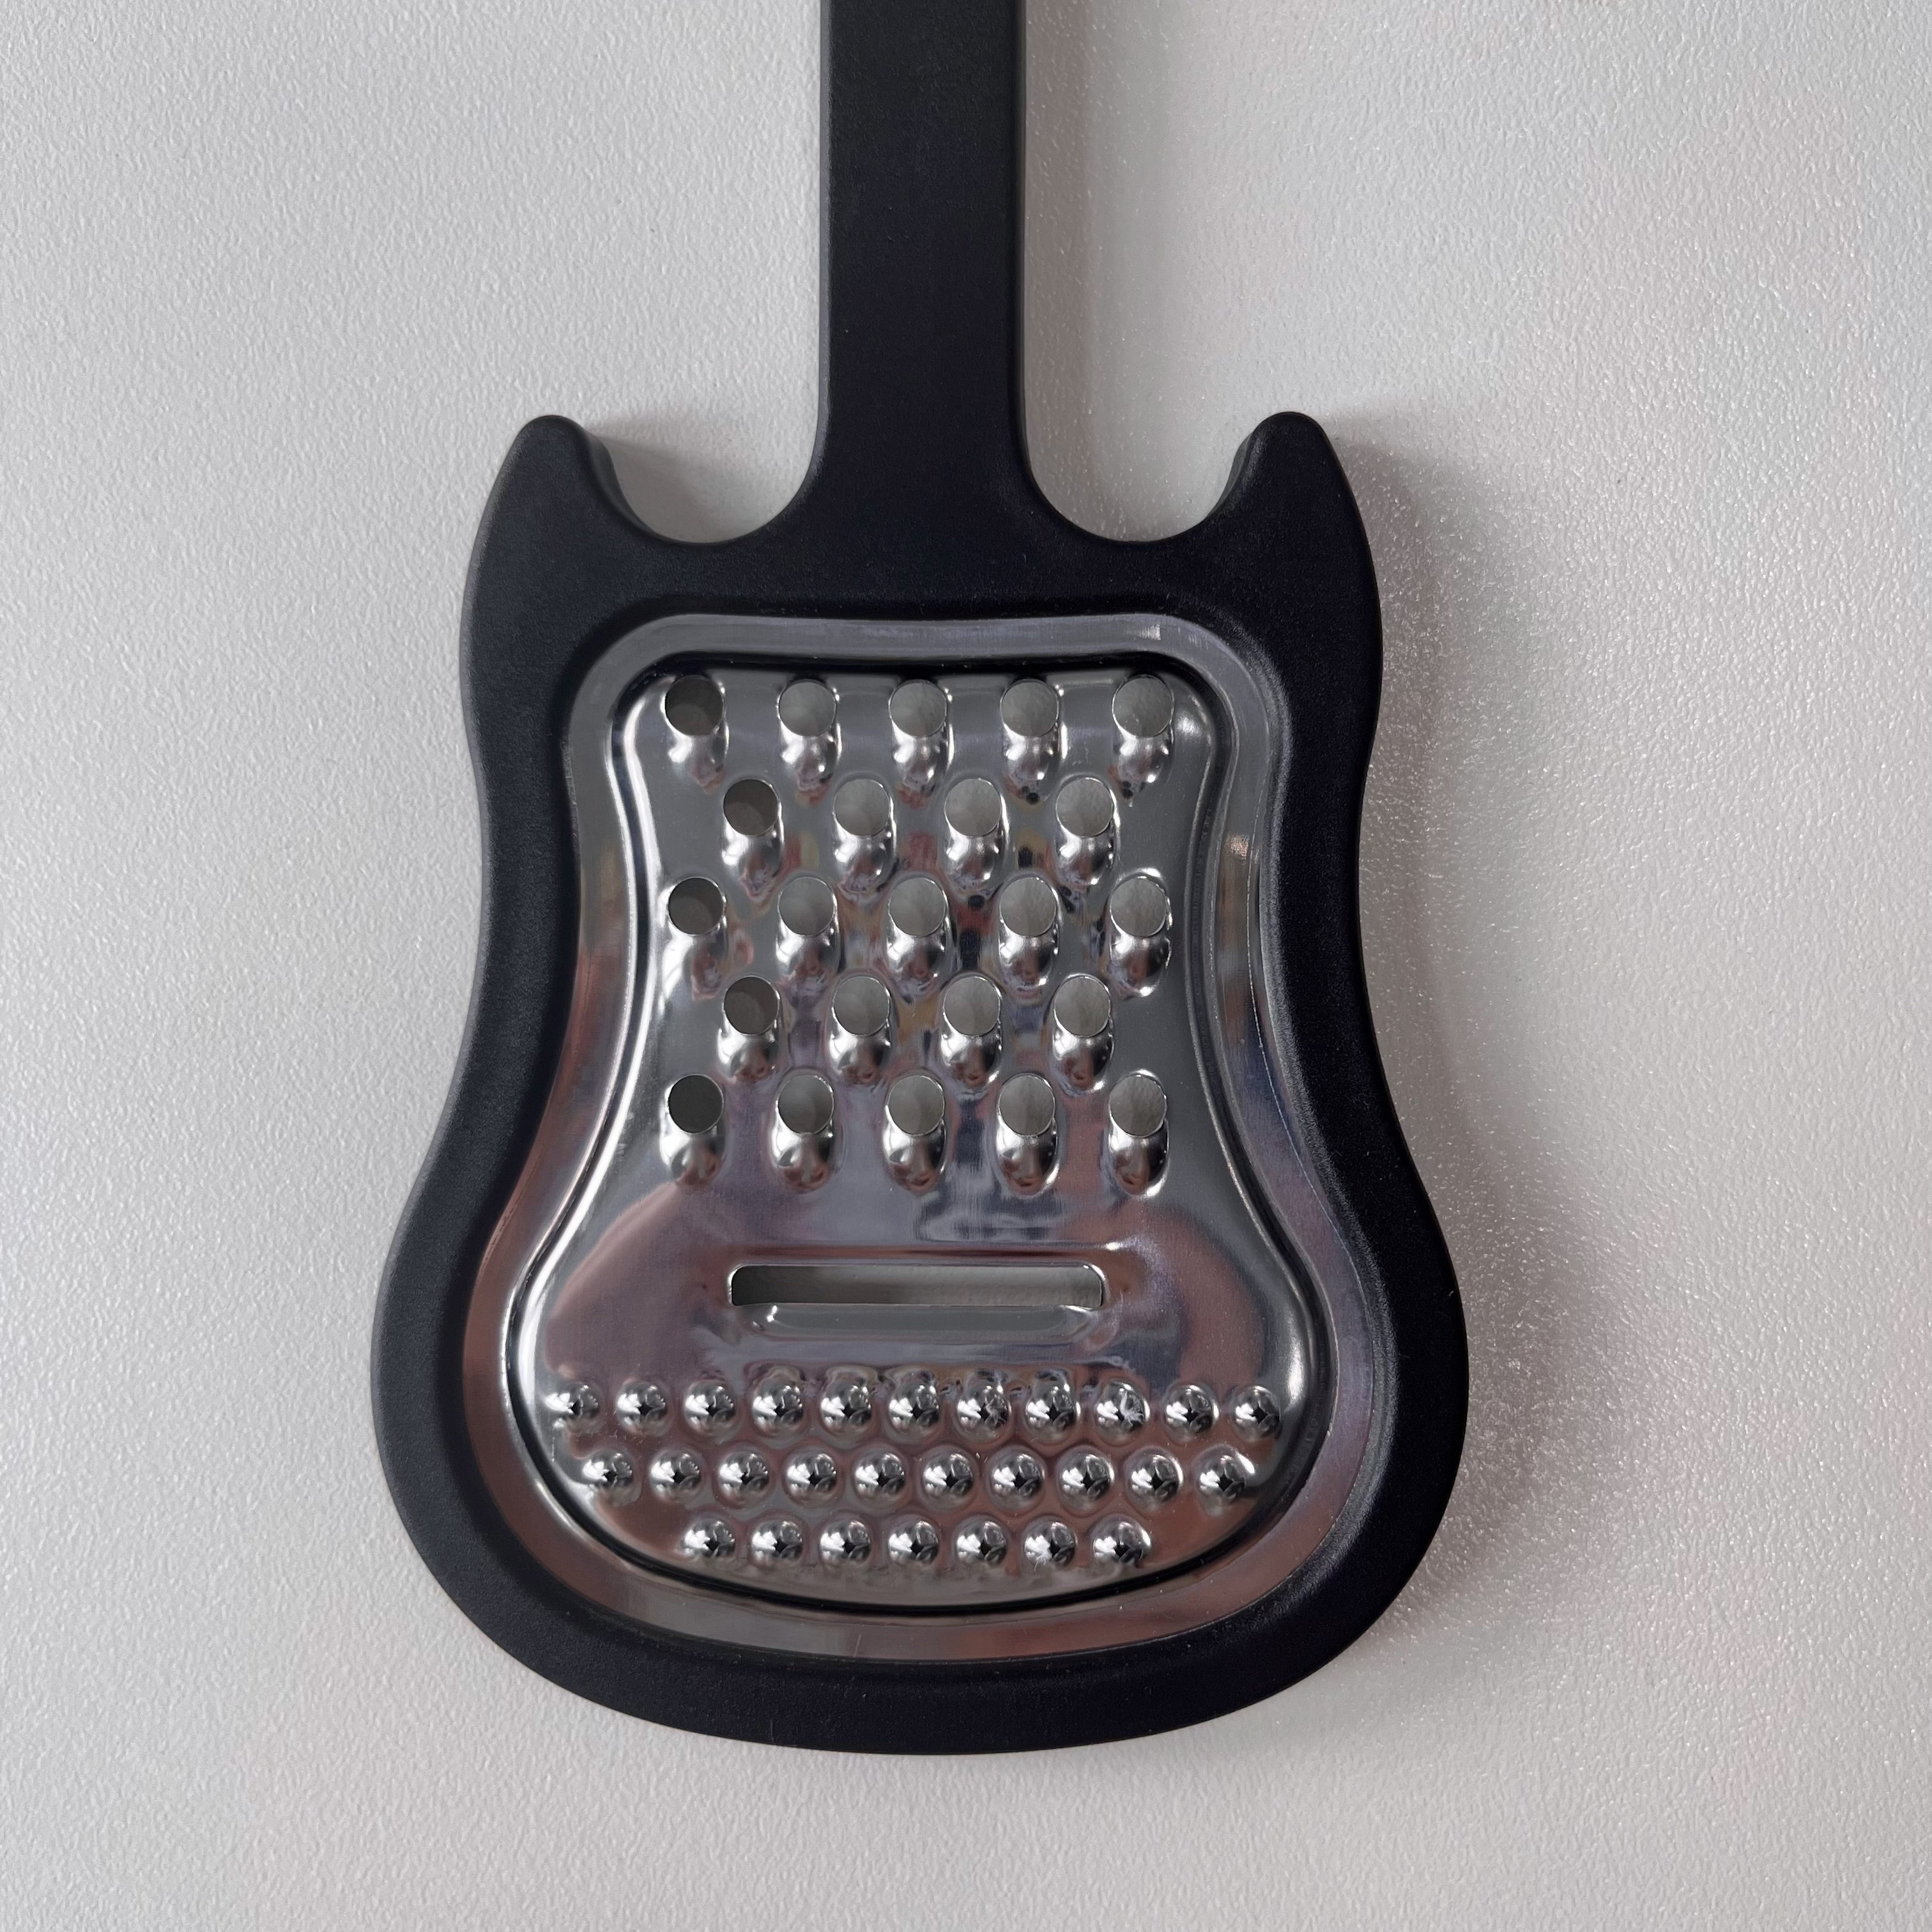 Guitar Cheese Shredder